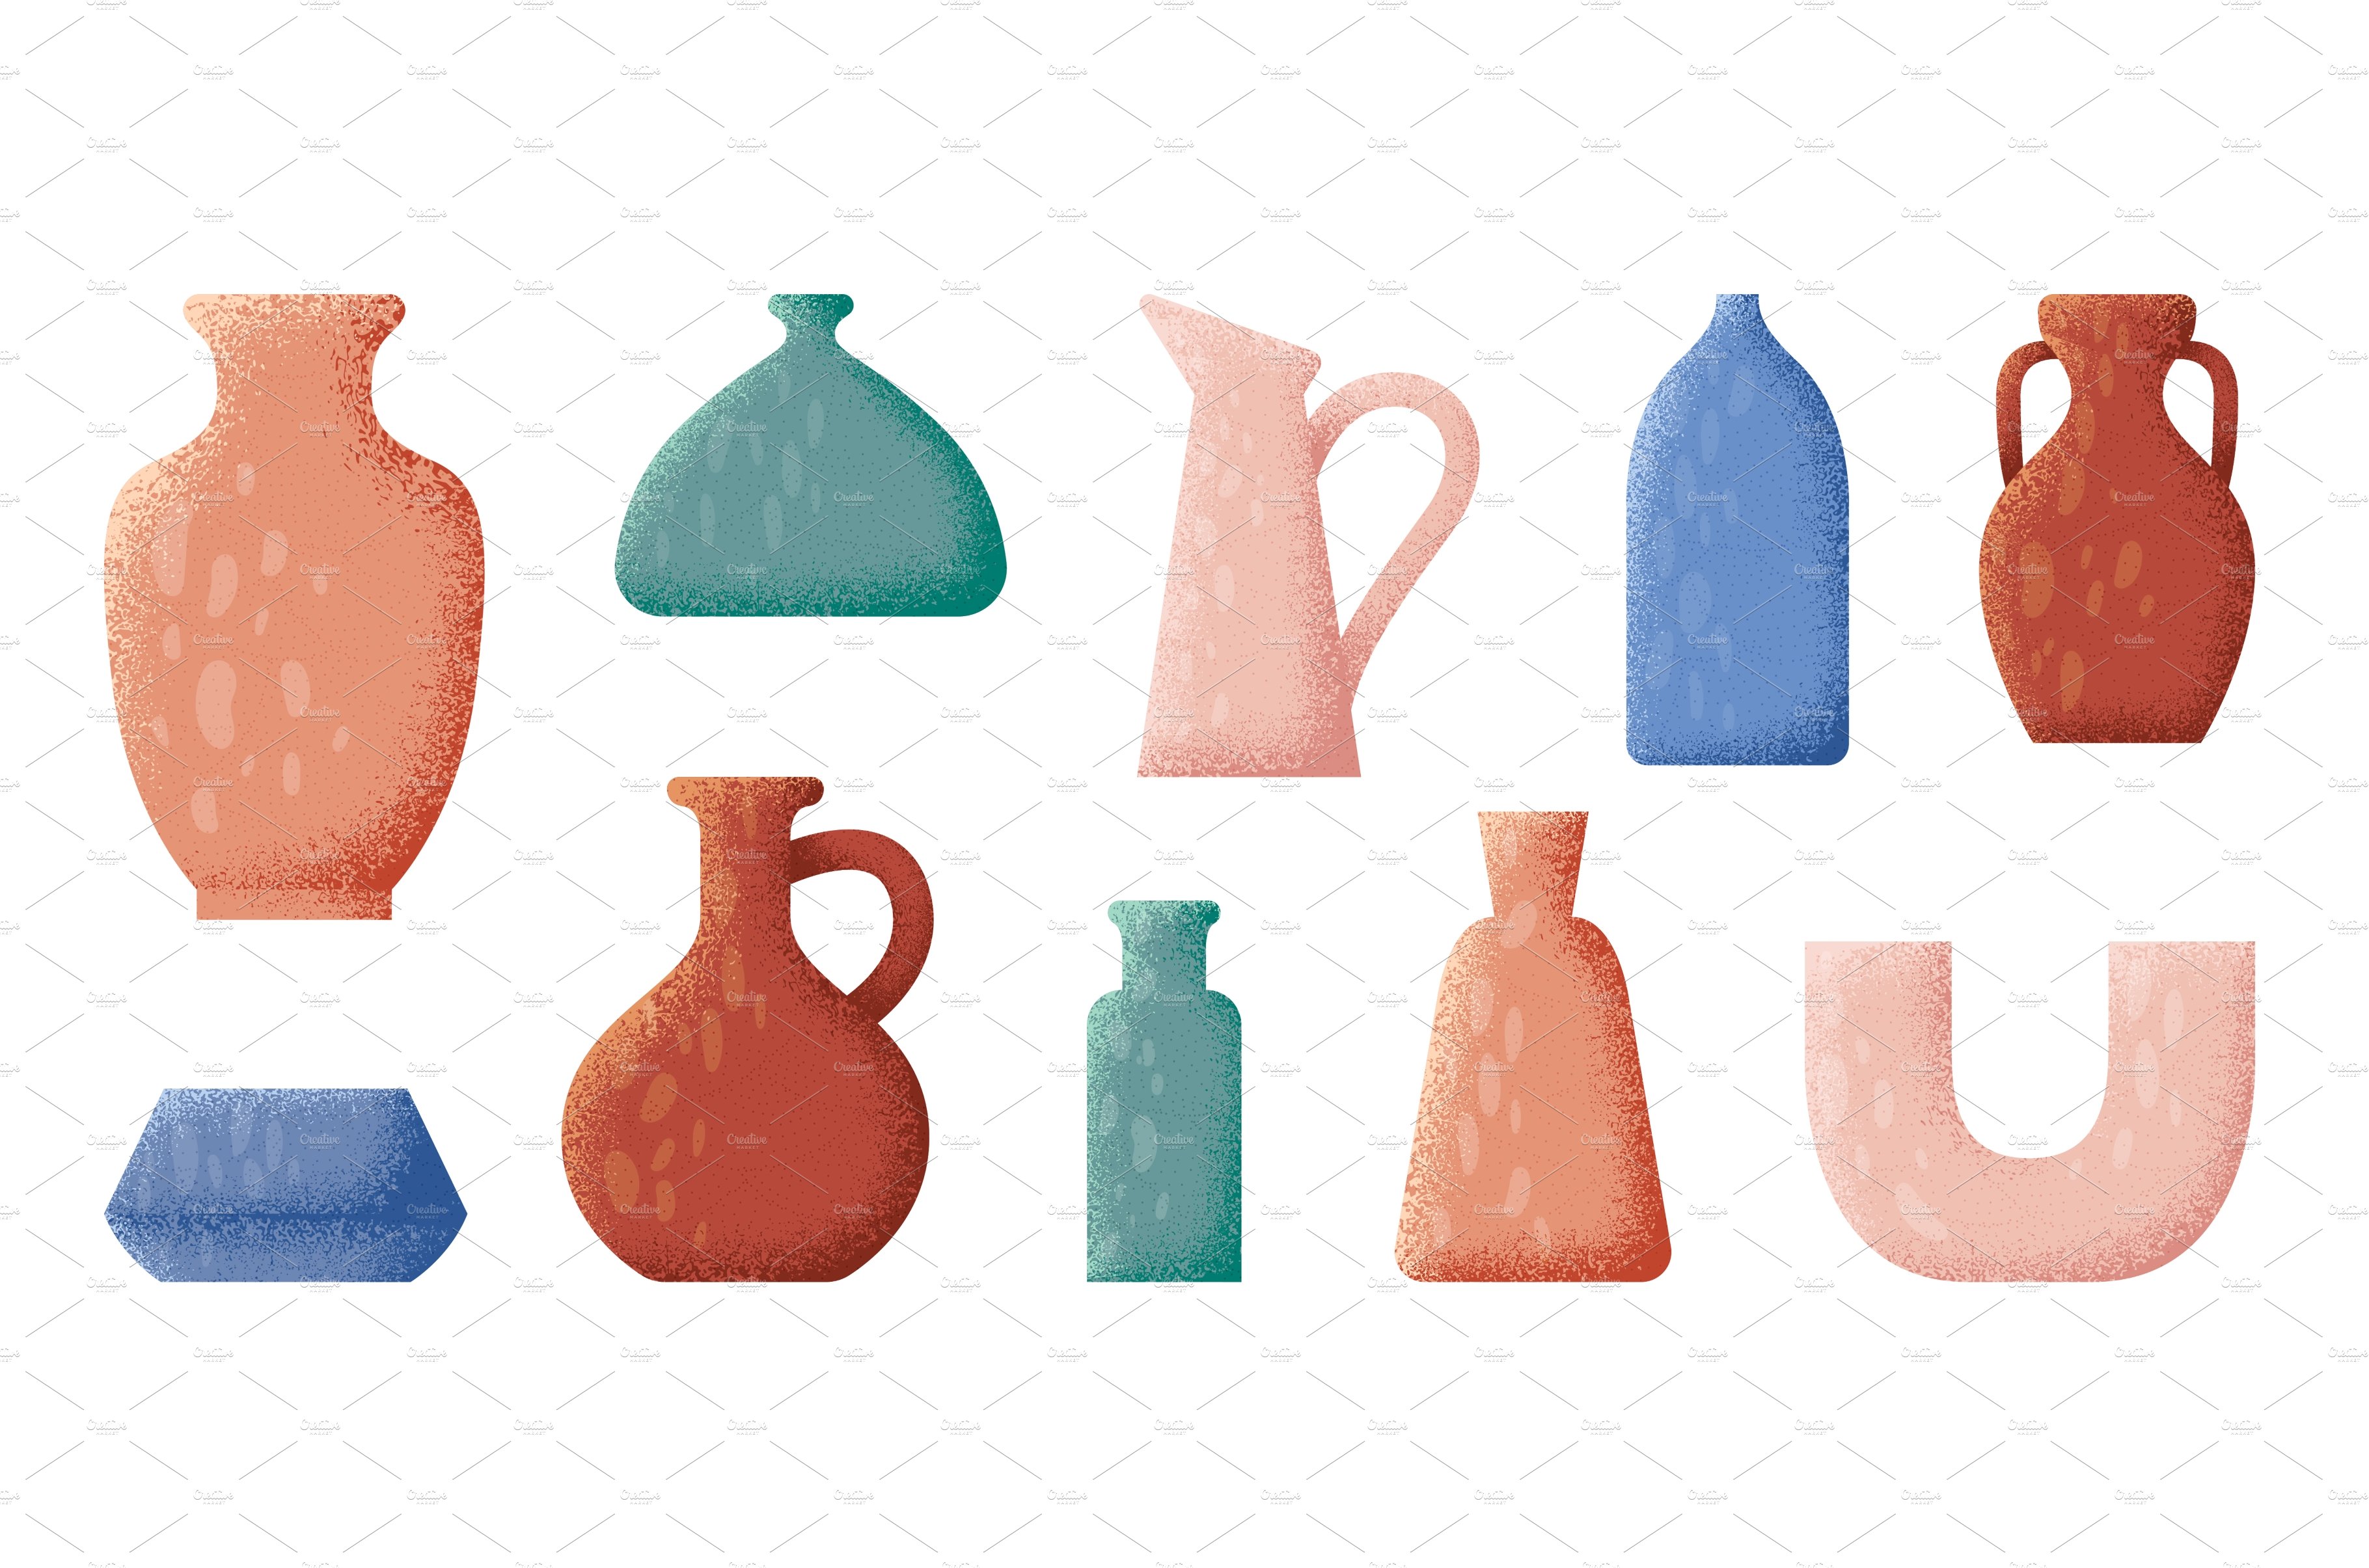 Ceramic vases. Pottery clay vase cover image.